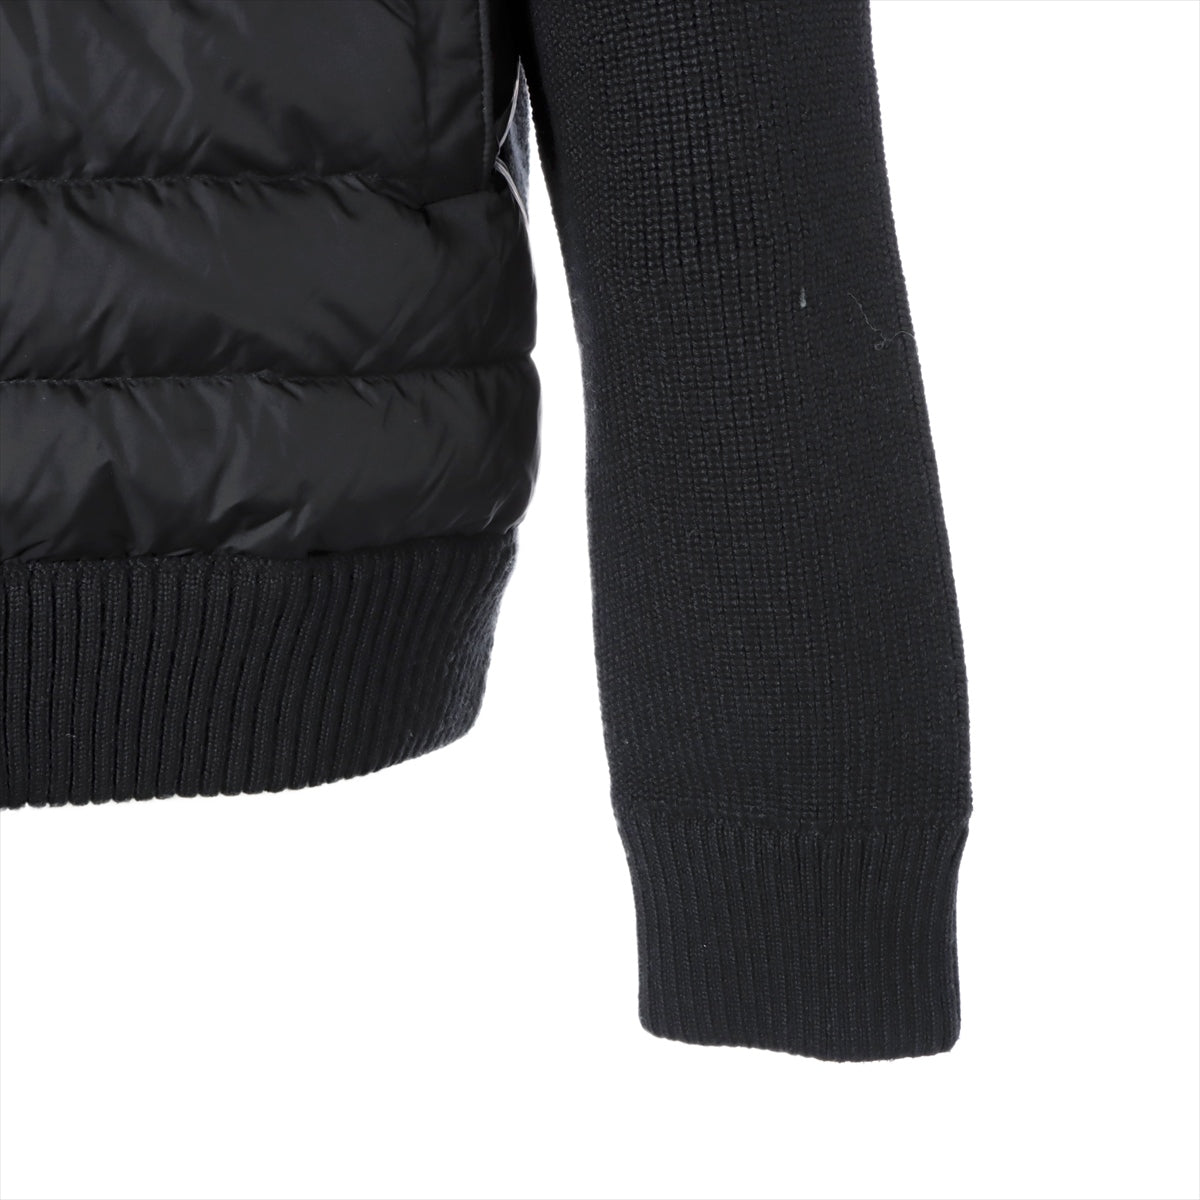 Moncler 22 years Wool & nylon Down jacket XXL Men's Black  H20919B50800 Switching knit